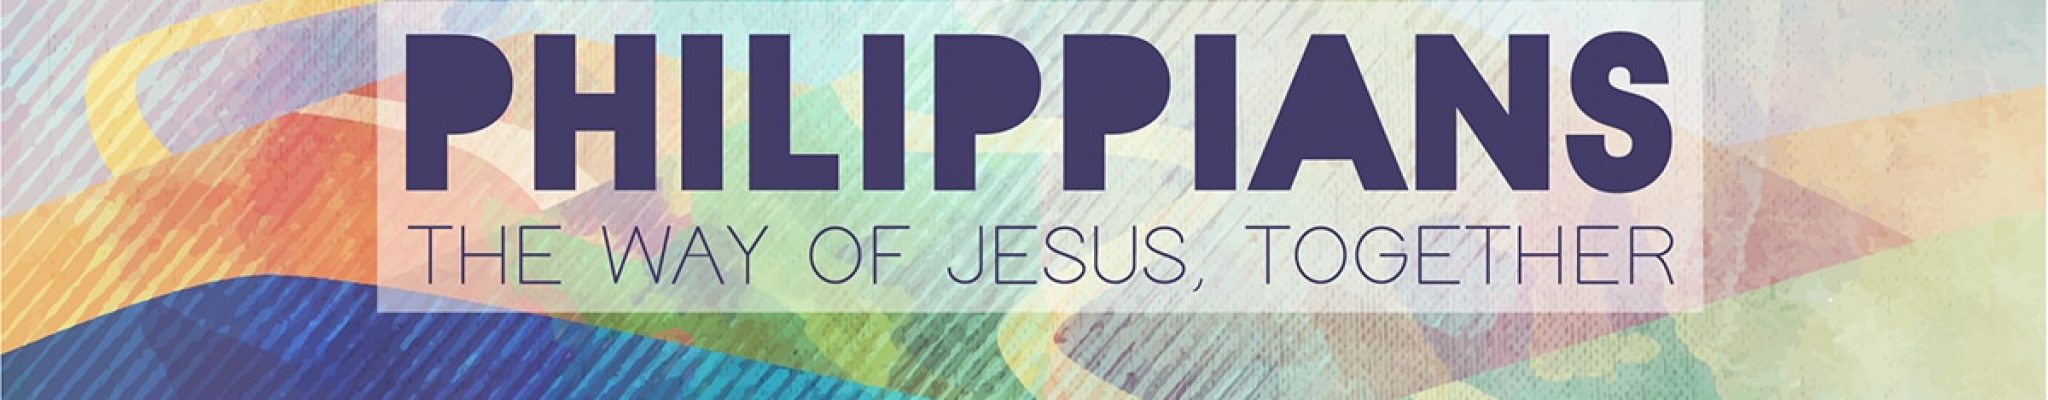 Philippians Branding [Recovered]